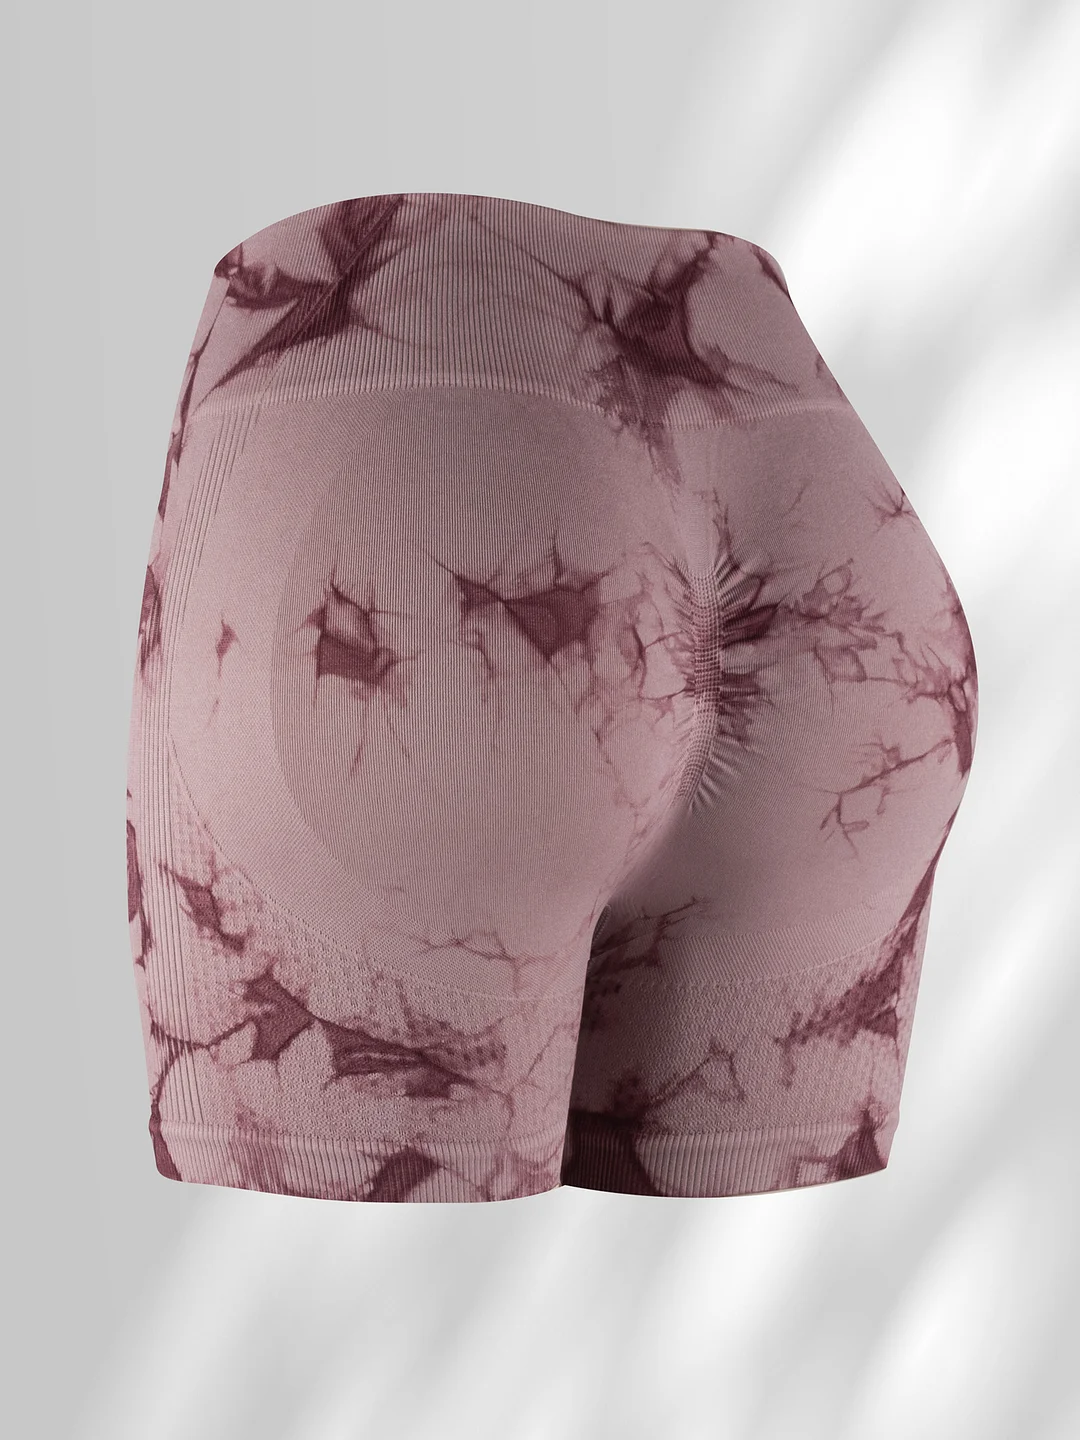 PASUXI Summer Seamless Hot Selling Pants High Waist Lady Gym Fitness Yoga Tie Dye Shorts Butt Lift Scrunch Women Shorts